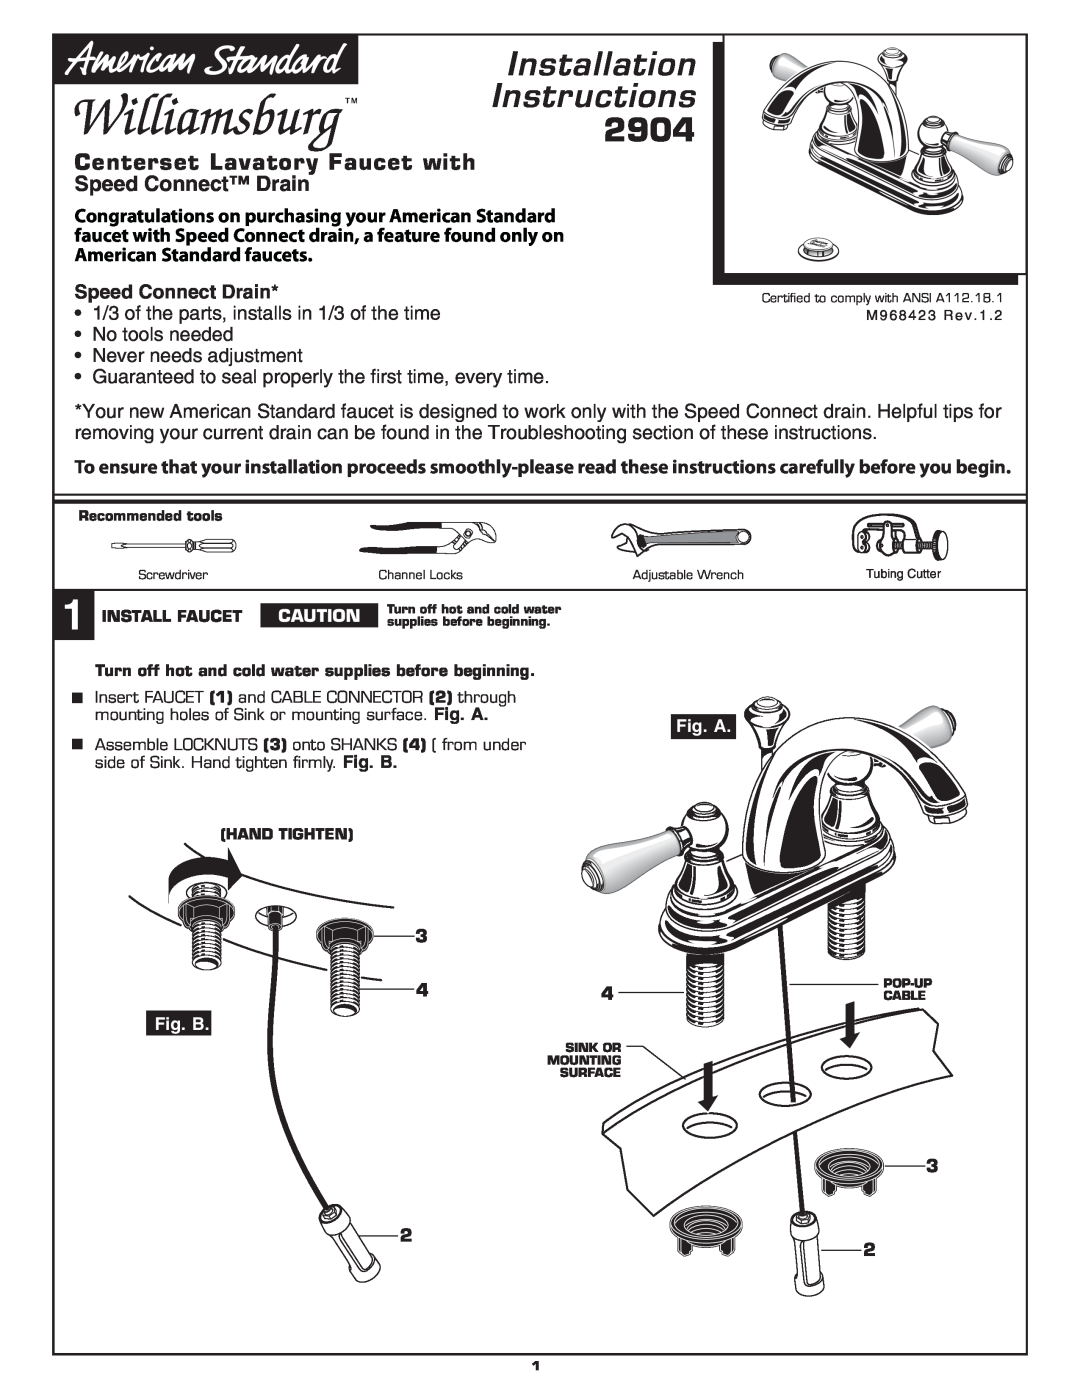 American Standard 2904 installation instructions Installation Instructions, Speed Connect Drain, Fig. A, Fig. B 